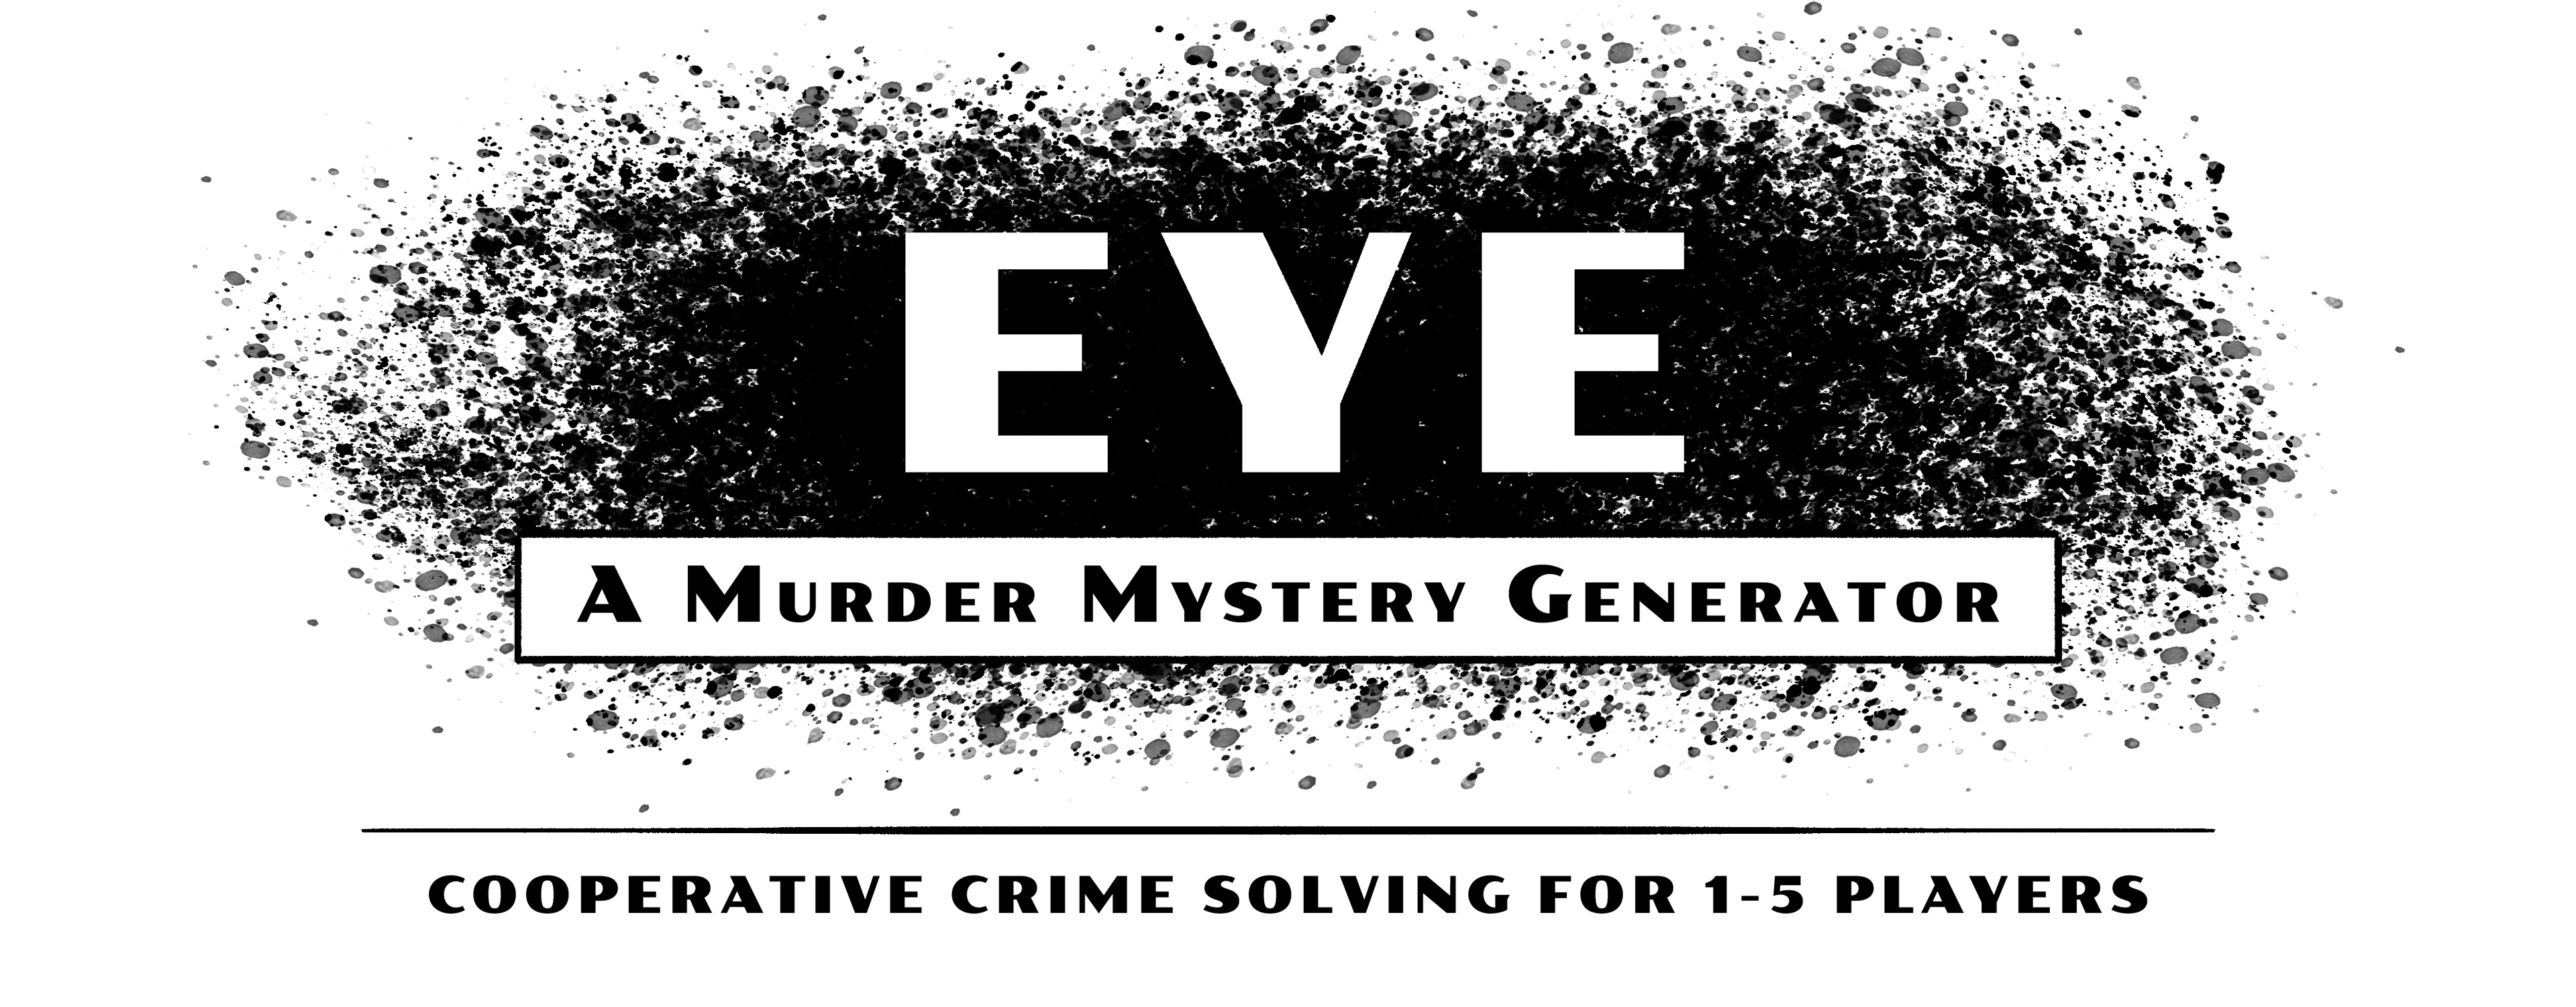 EYE: A Murder Mystery Generator